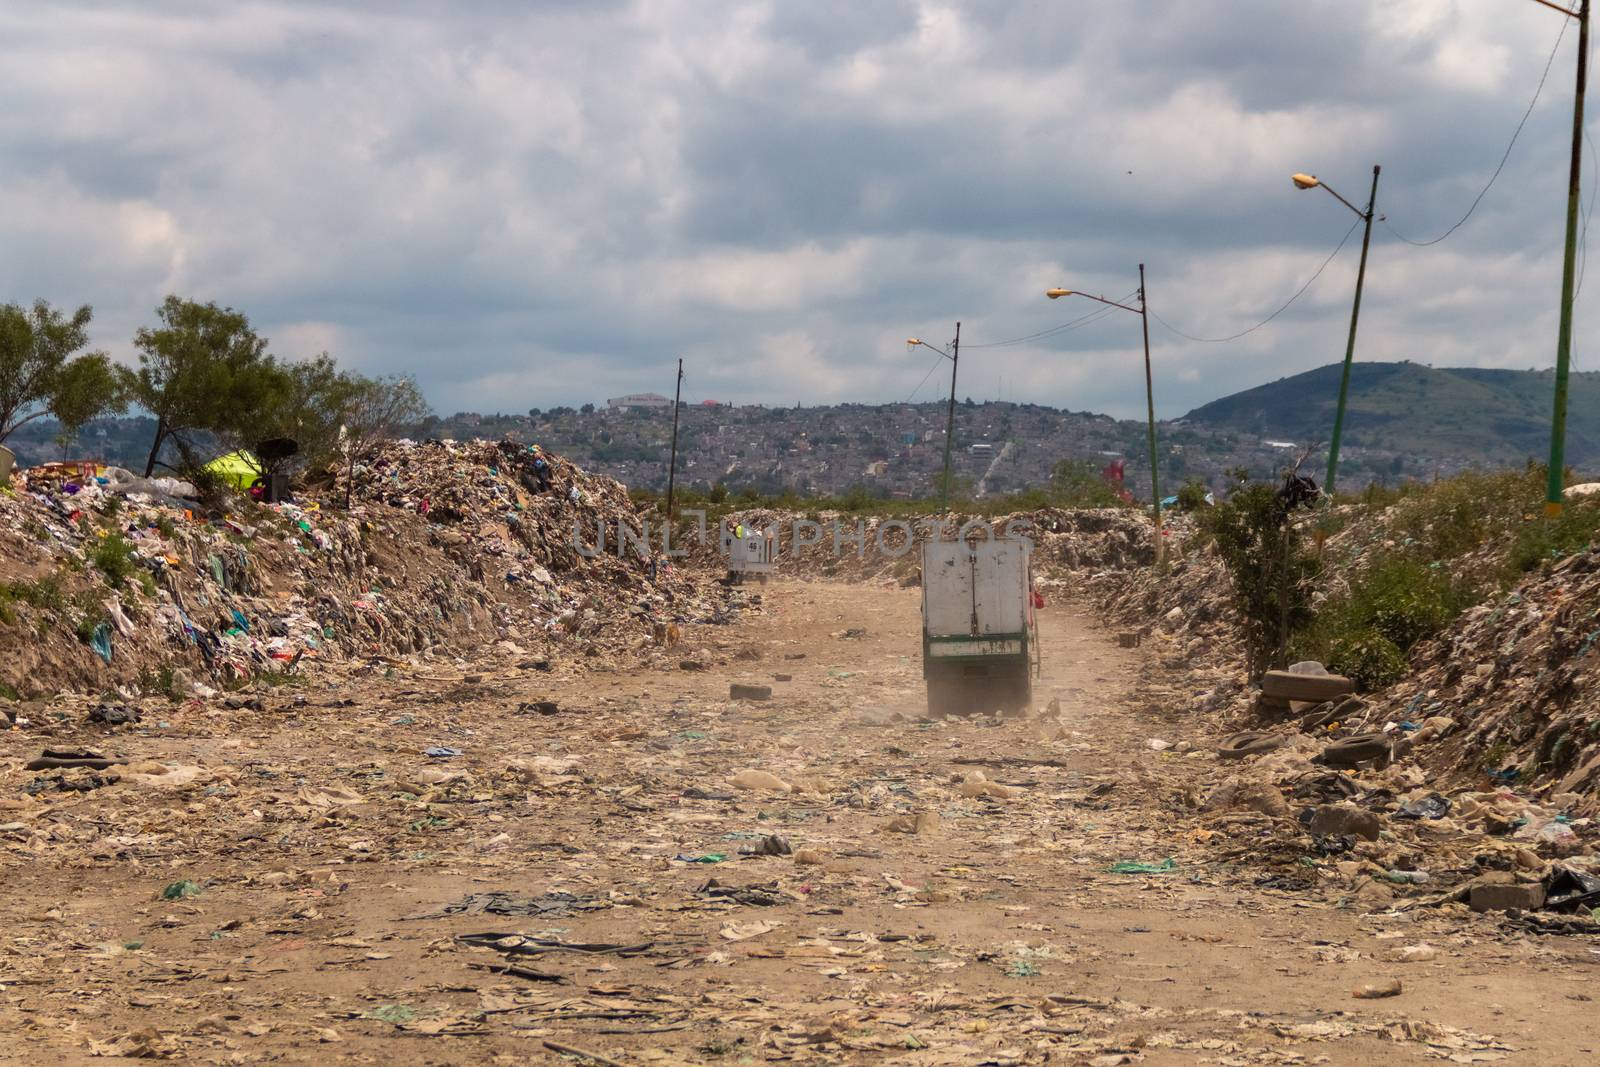 CDMX. Mexico September, 10, 2020. A huge landfill for waste disposal. Accumulation of garbage in landfill or deposit. by leo_de_la_garza